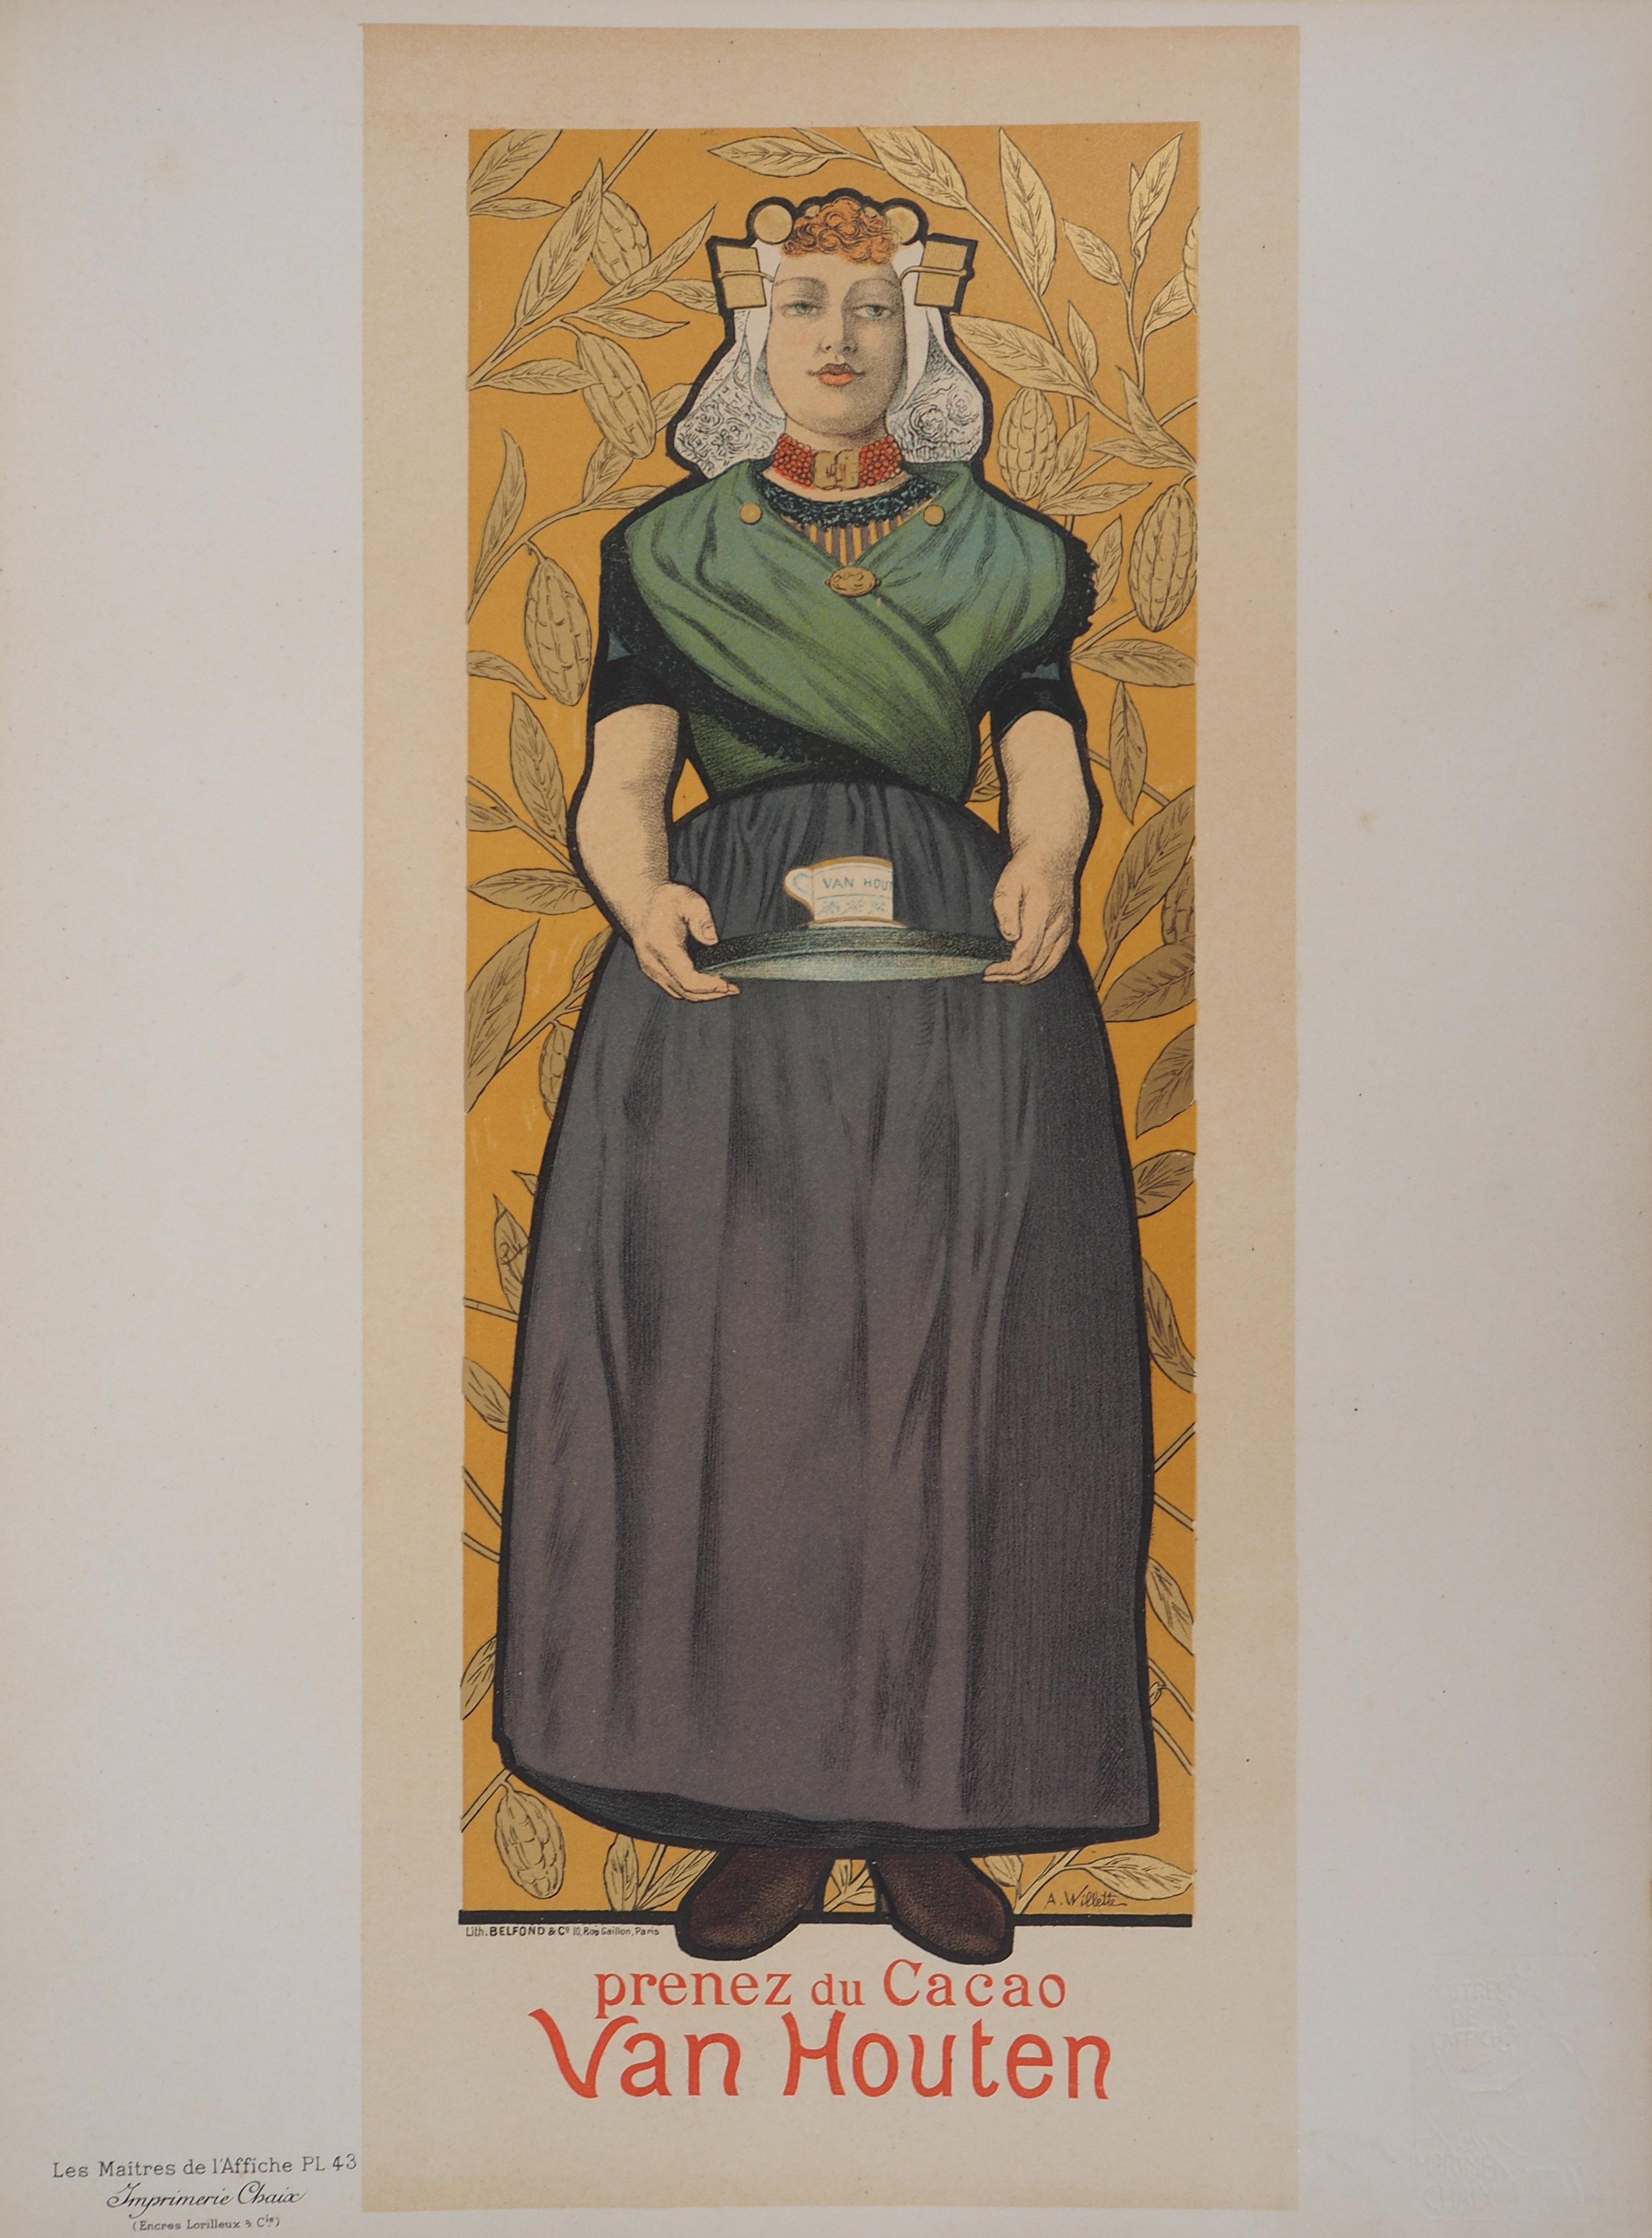 Van Houten : Woman and Cocoa - Lithograph (Les Maîtres de l'Affiche), 1895 - Print by Adolphe Willette